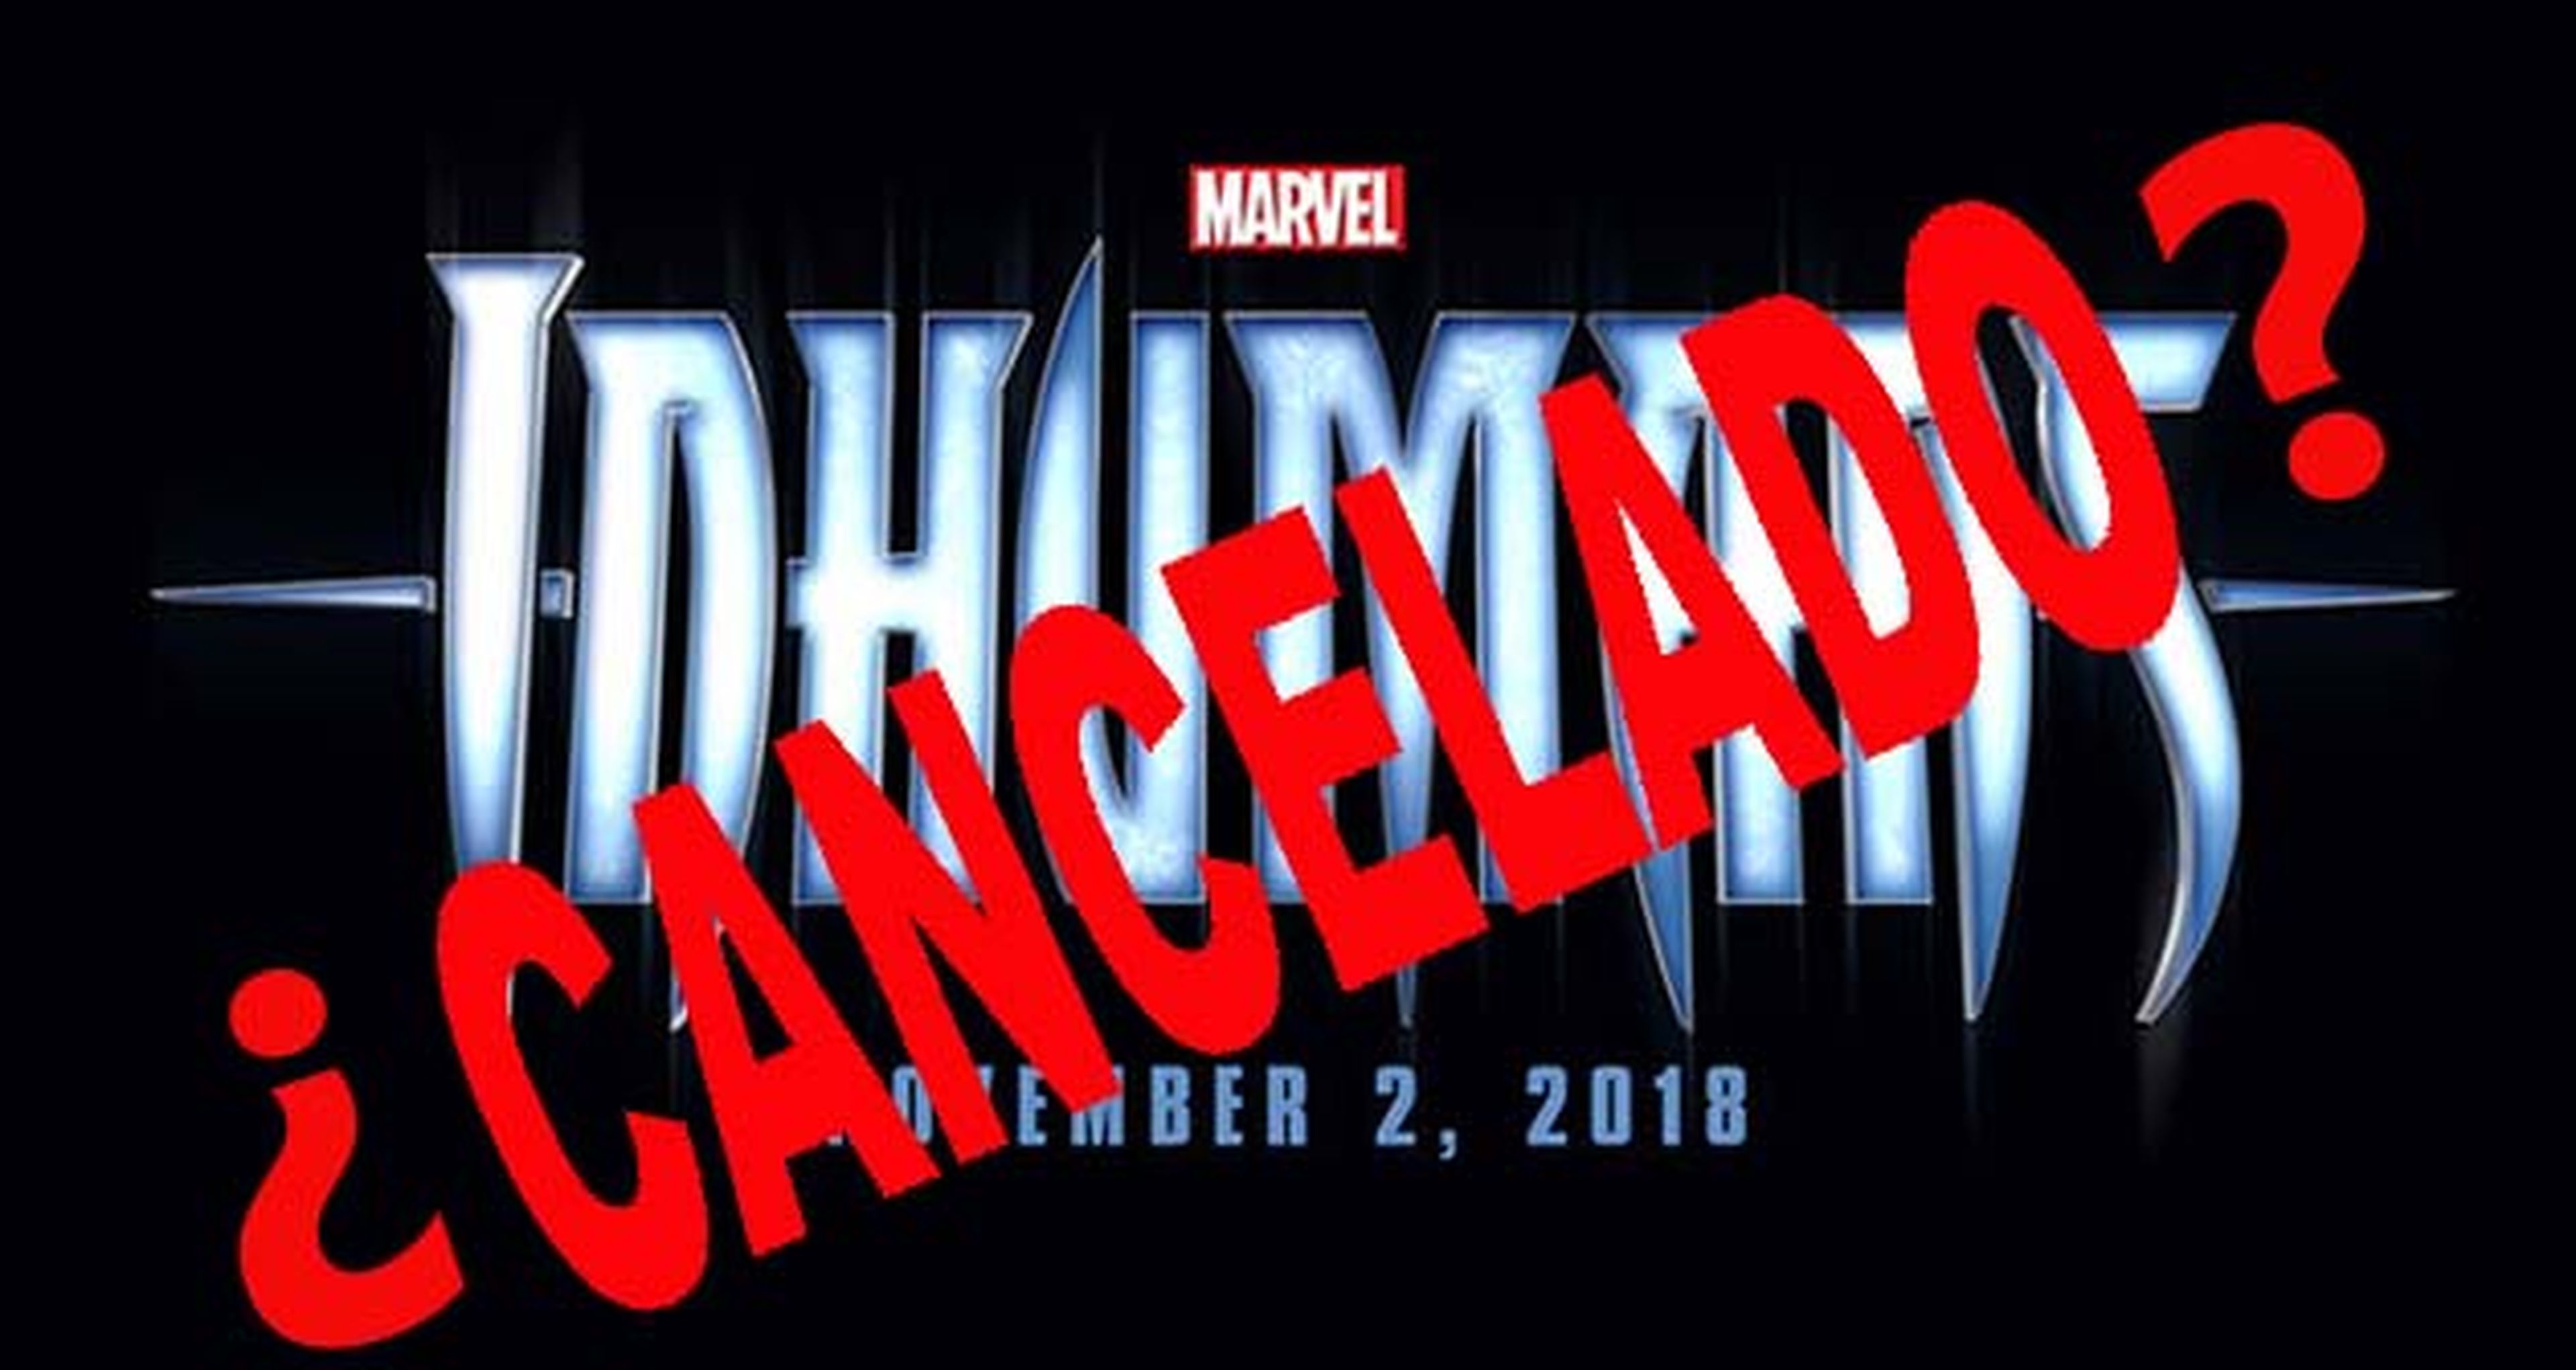 Marvel NO ha cancelado Inhumanos